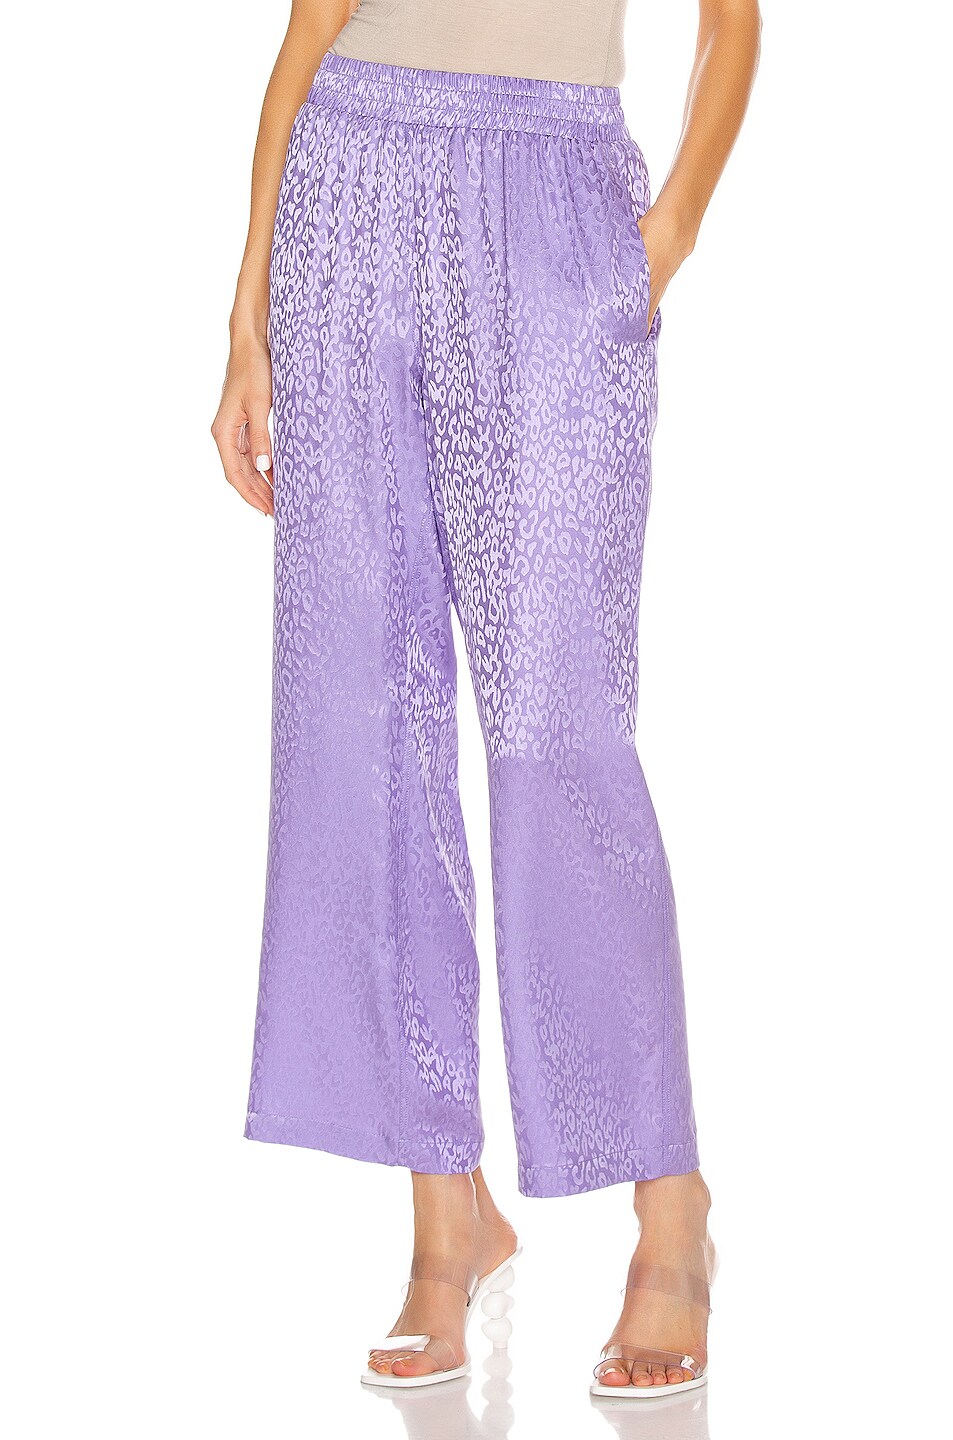 Image 1 of Les Reveries Tropical Pajama Pants in Purple Leopard Jacquard